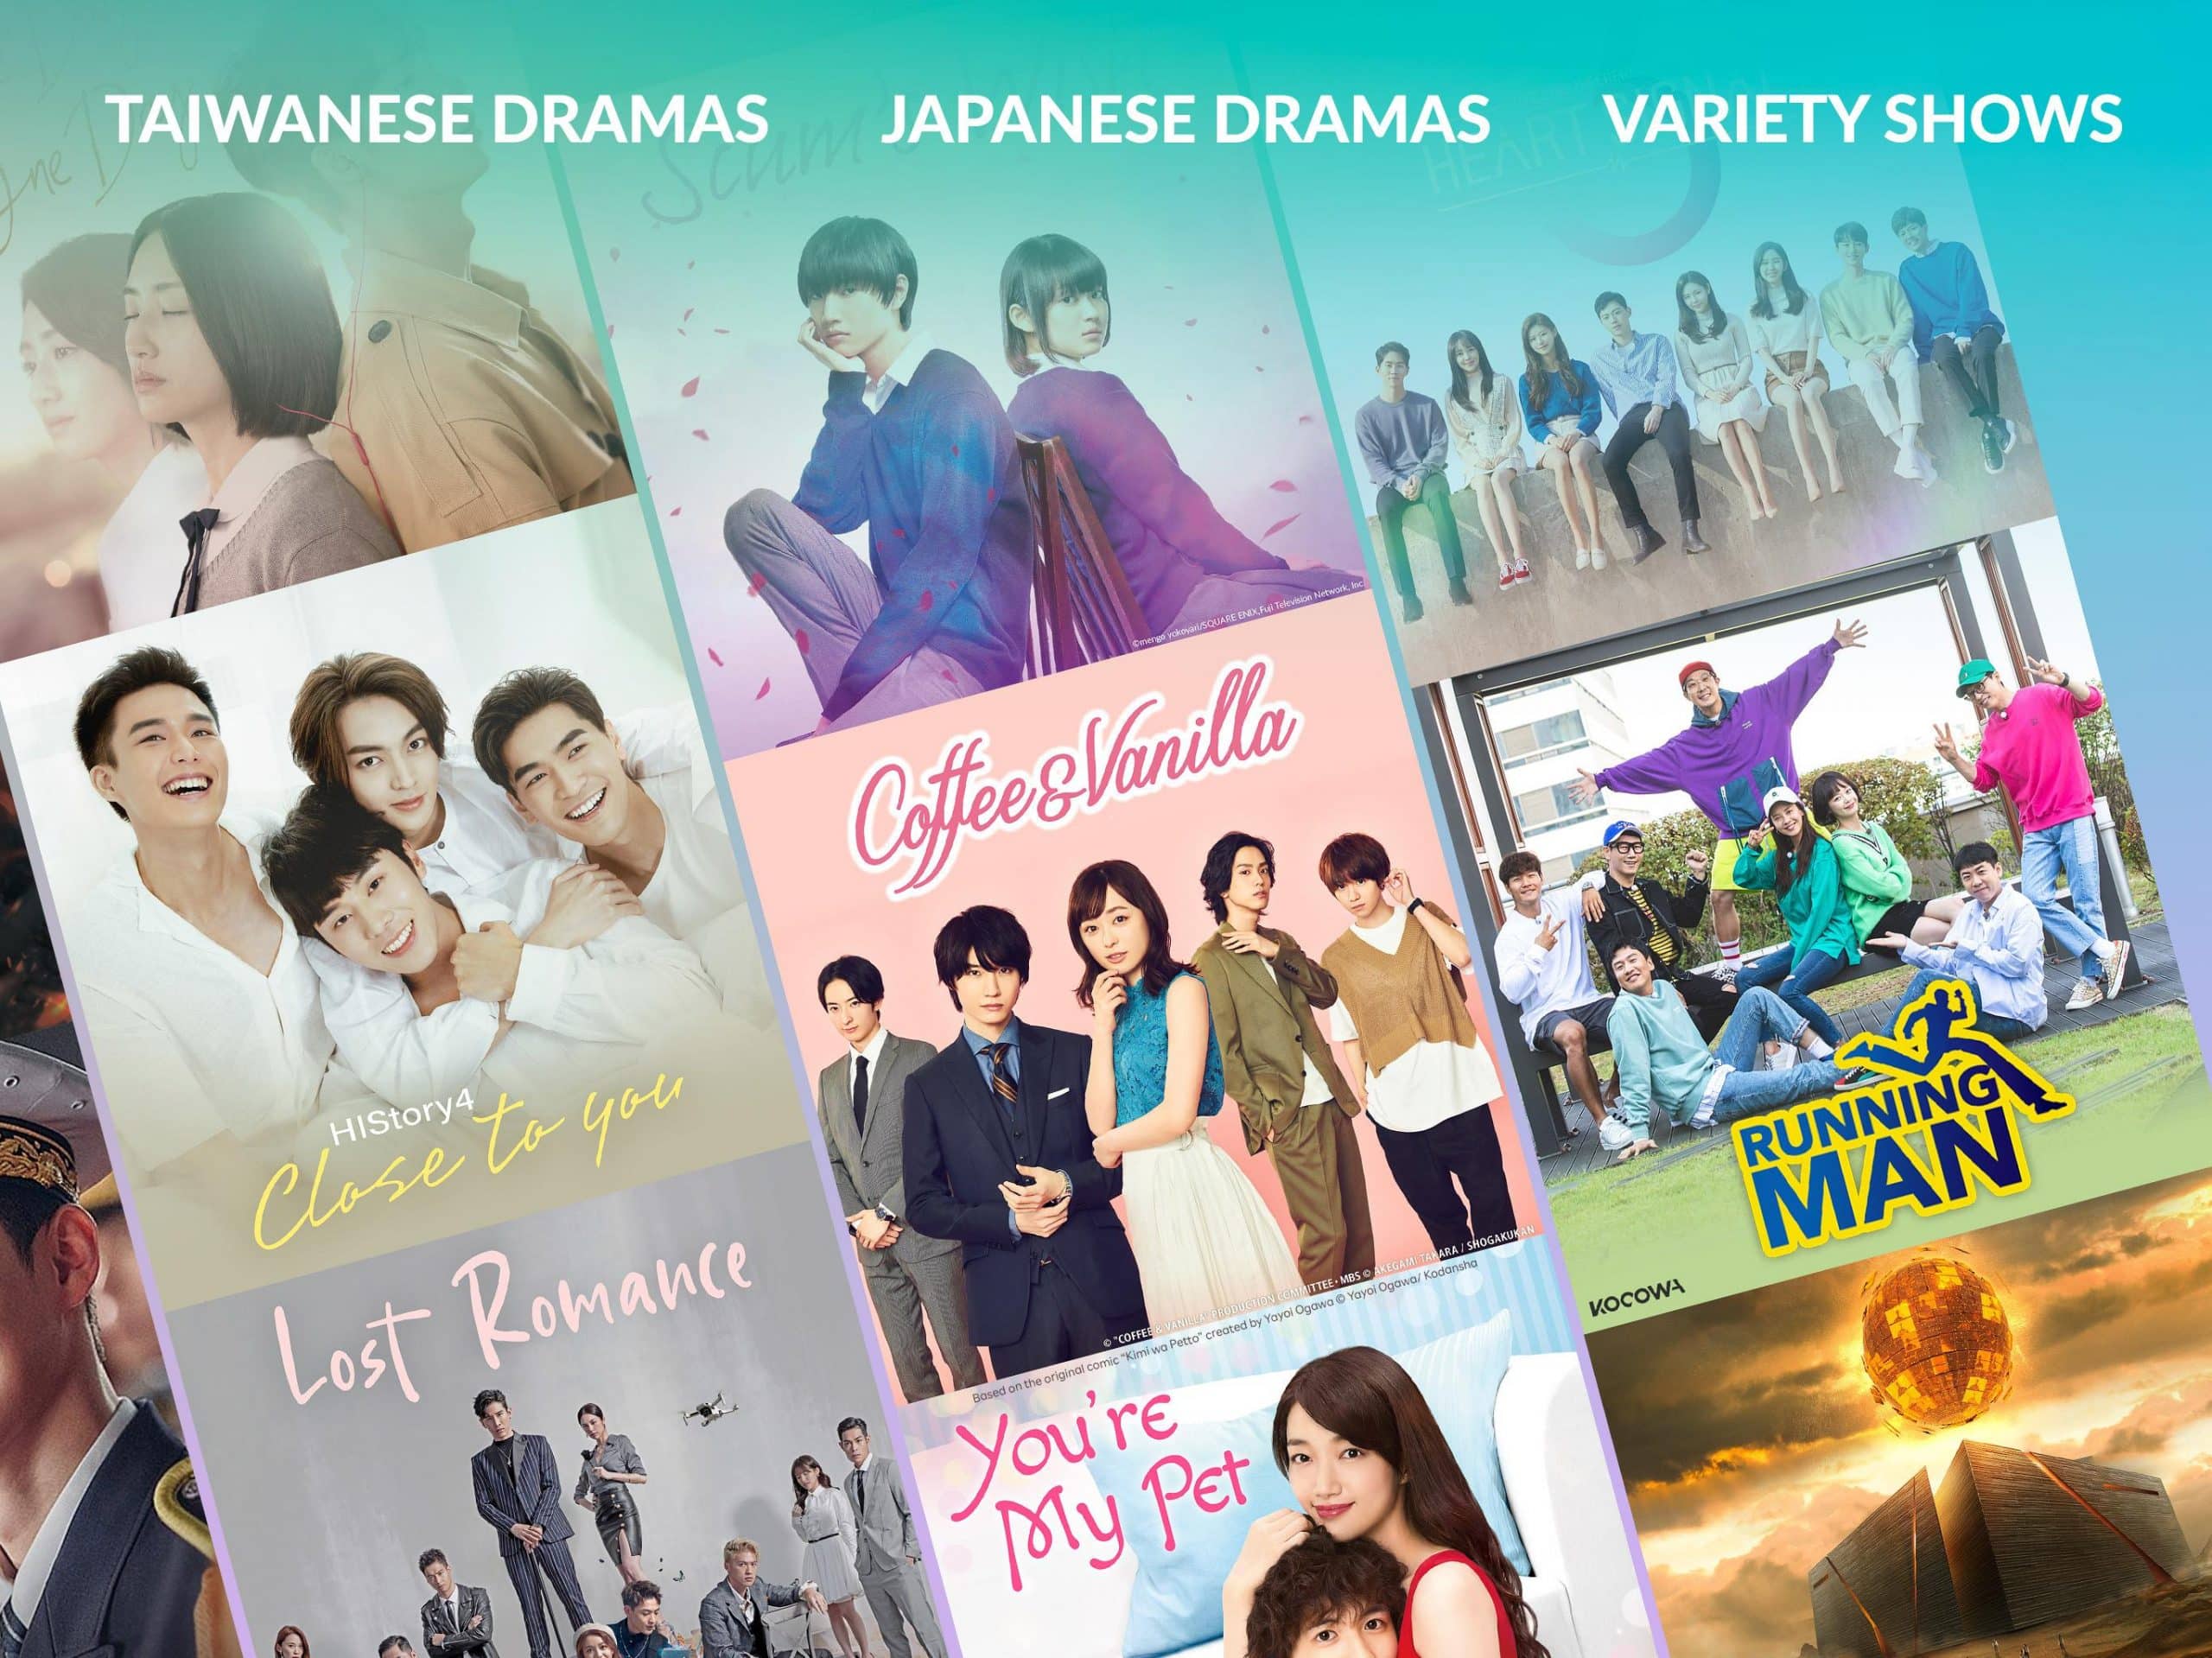 Nonton streaming drama korea china jepang thailand subtitle indonesia